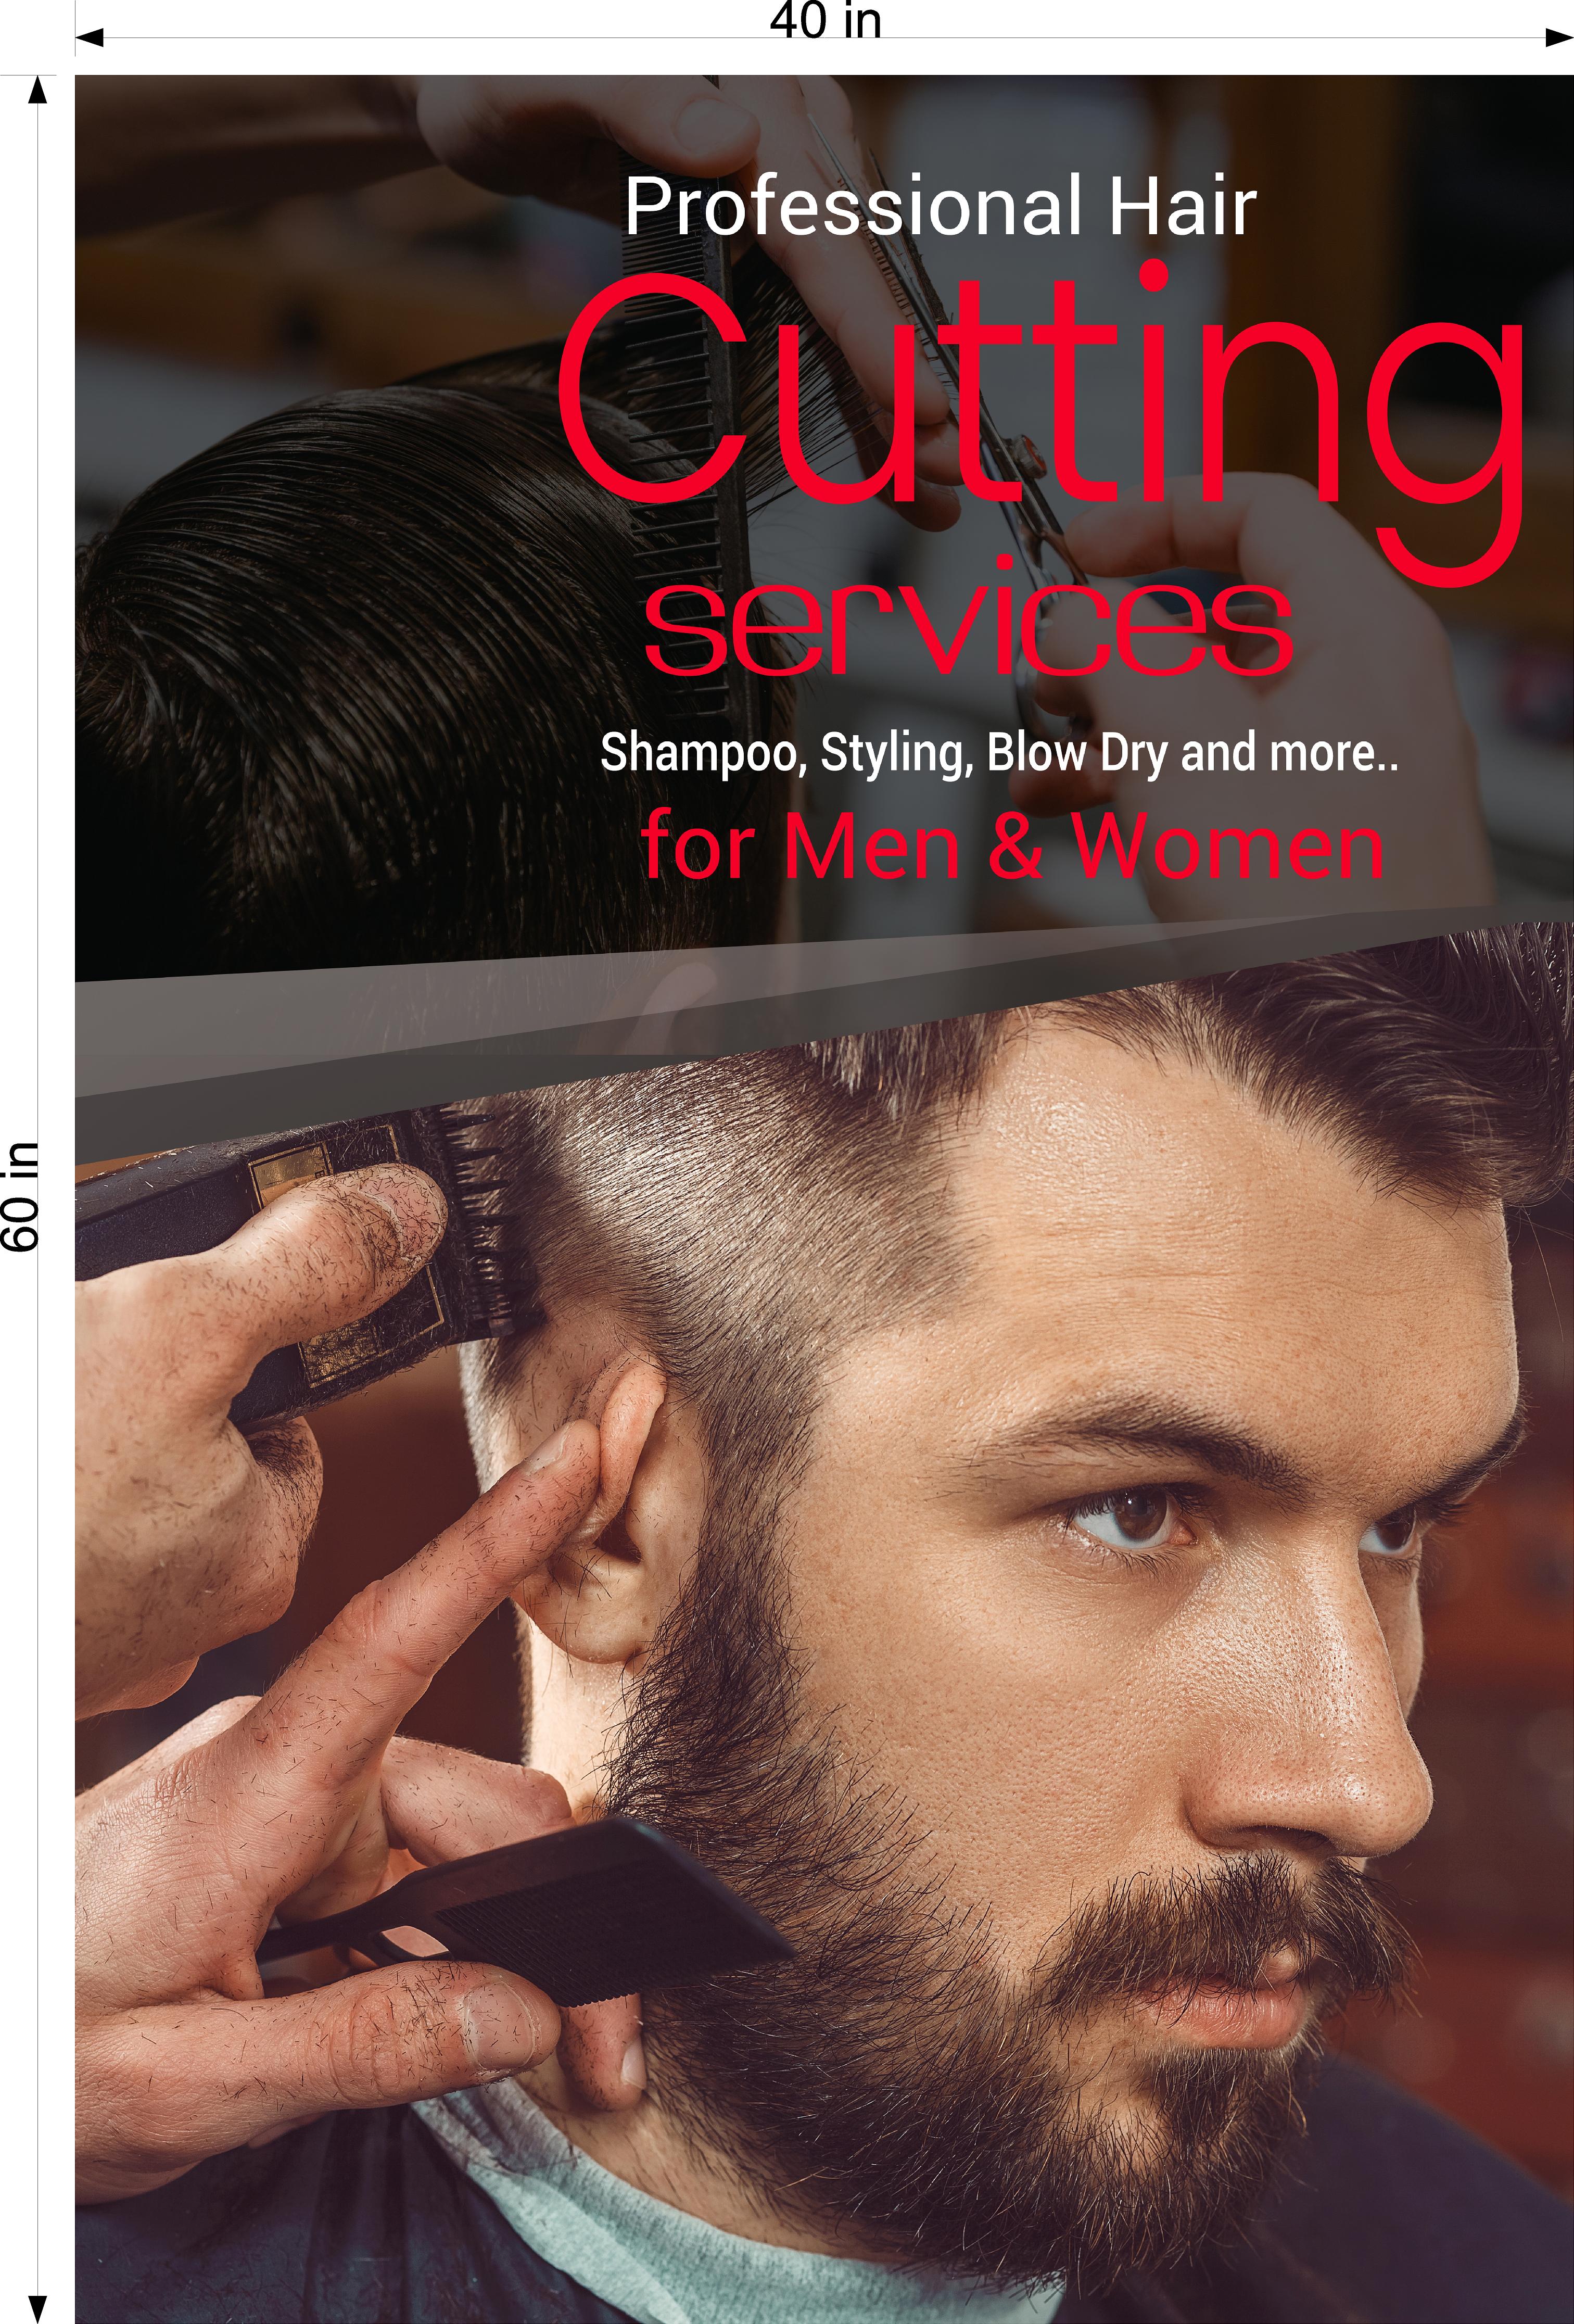 Barber 06 Photo-Realistic Paper Poster Premium Interior Sign Wall Window Non-Laminated Man Men Boy Beard Haircut Vertical